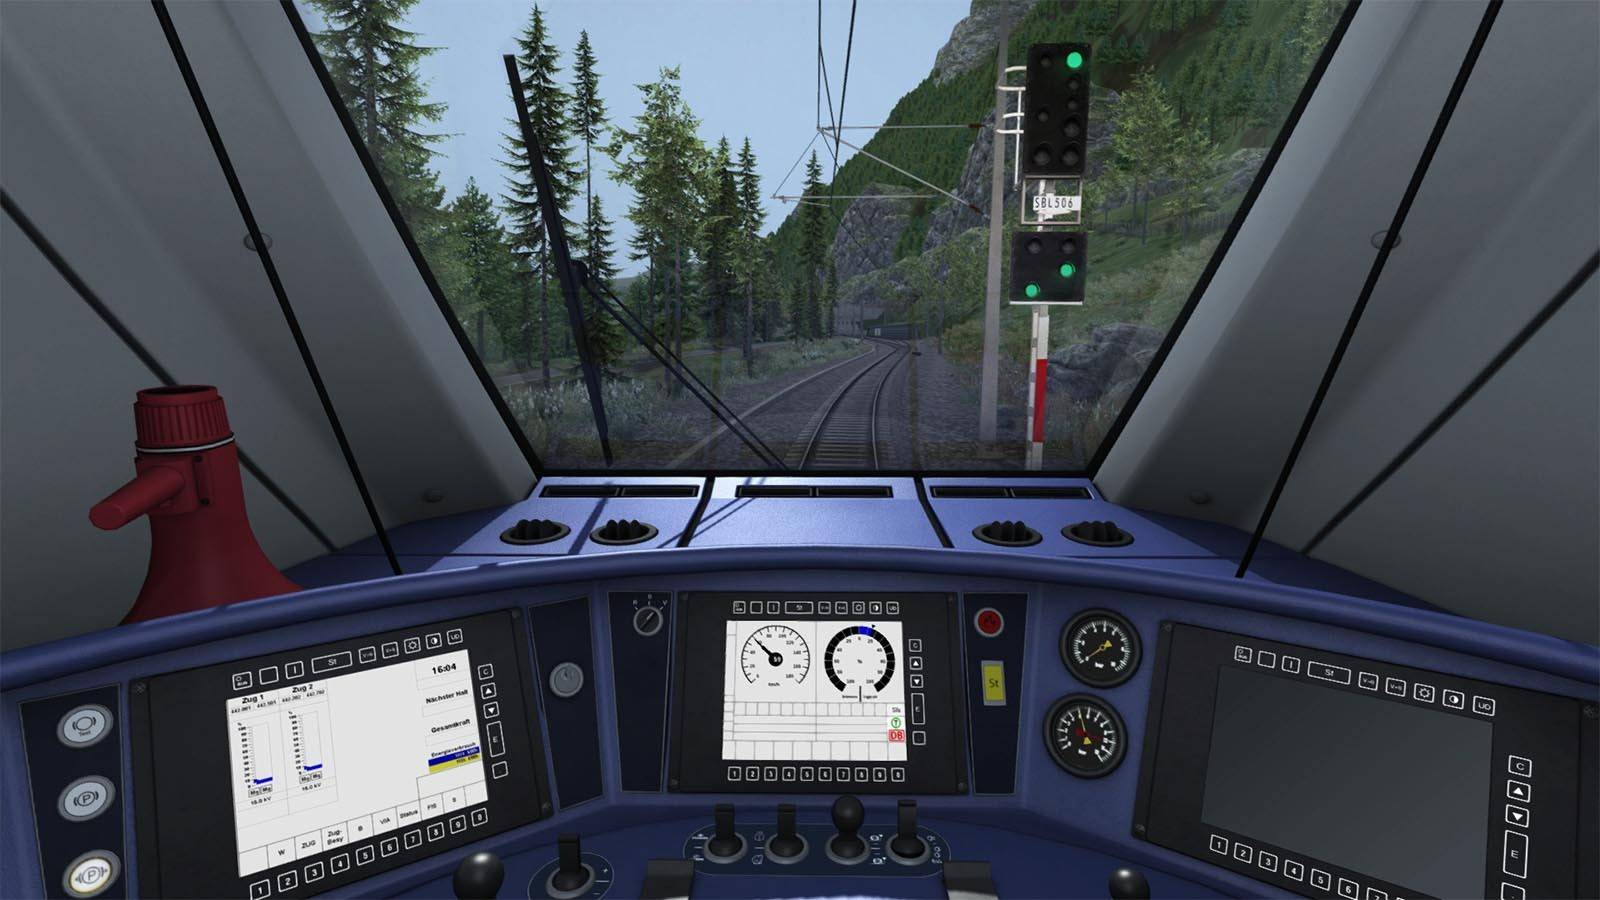 microsoft train simulator no cd crack download